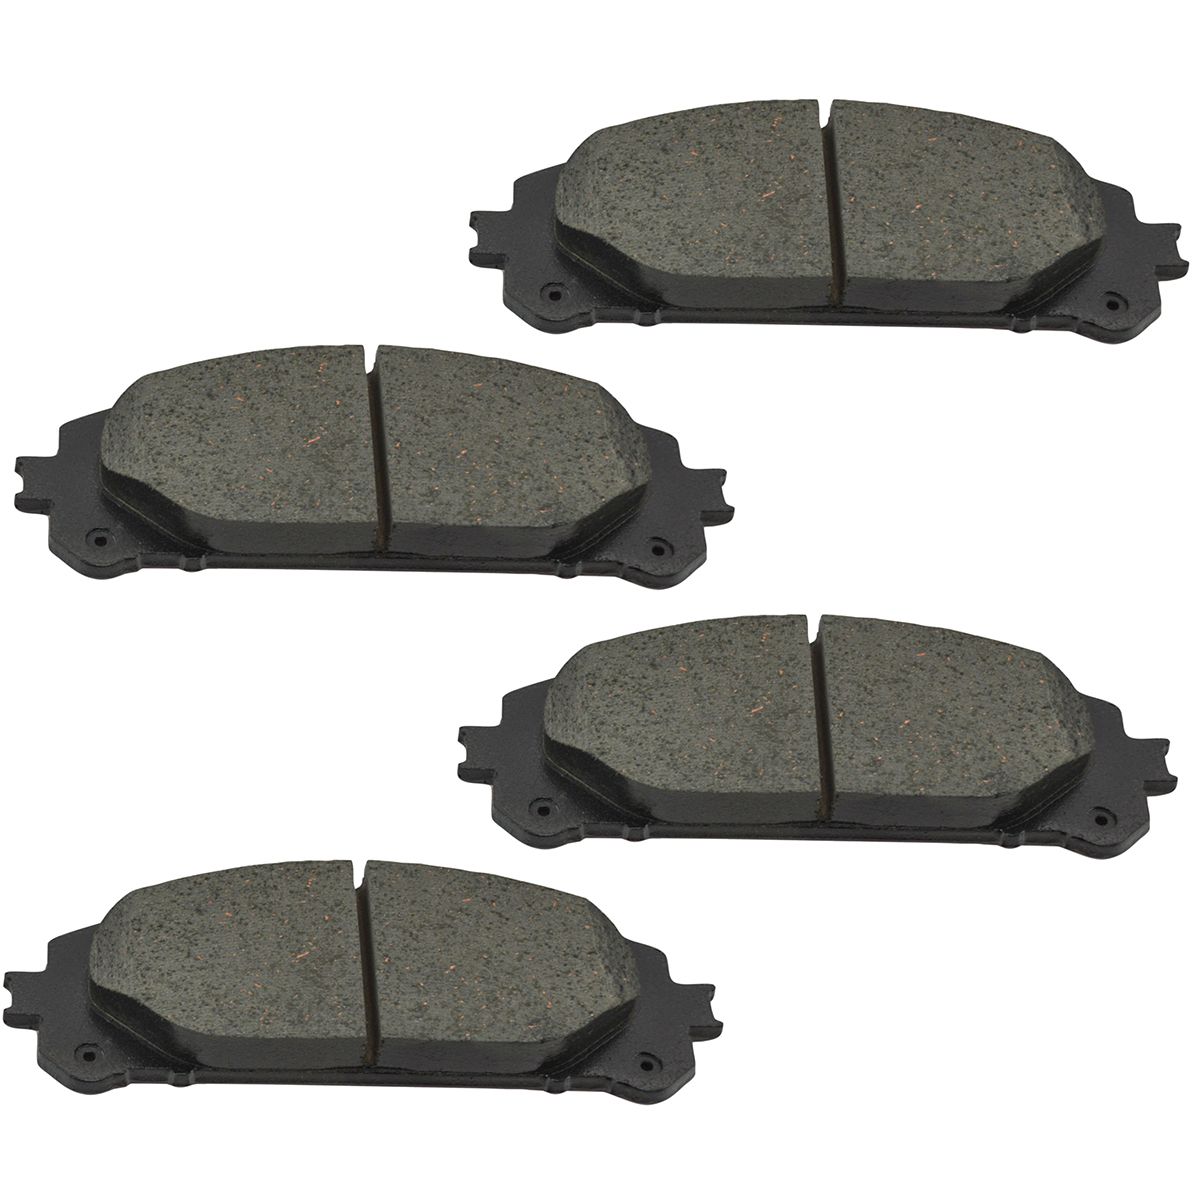 OEM Front & Rear Ceramic Brake Pad Kit Set for Toyota